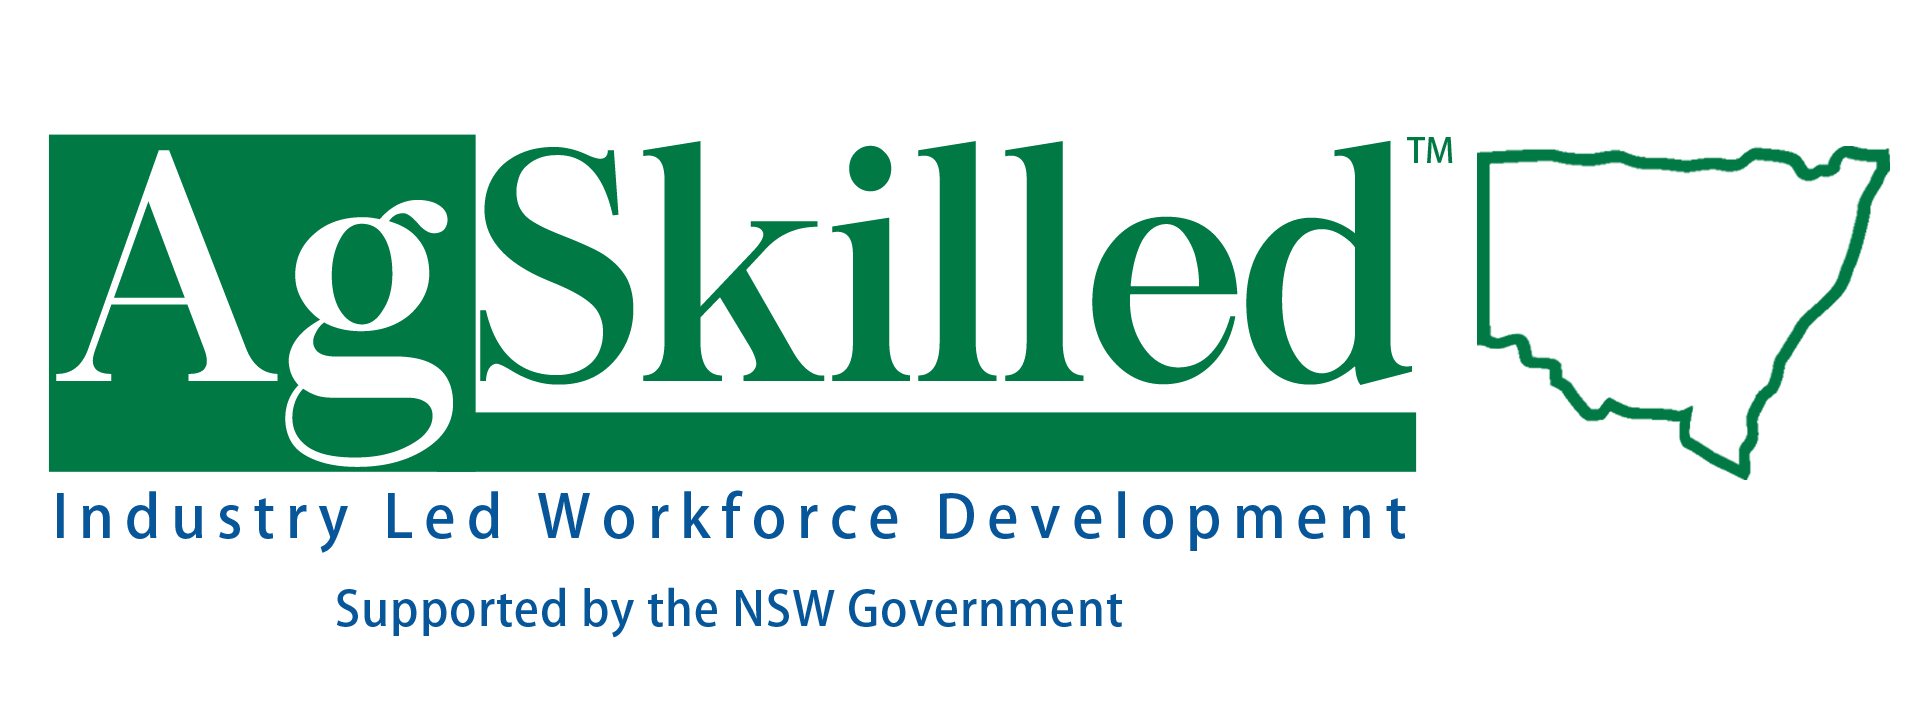 AgSkilled Industry Led Workforce Development